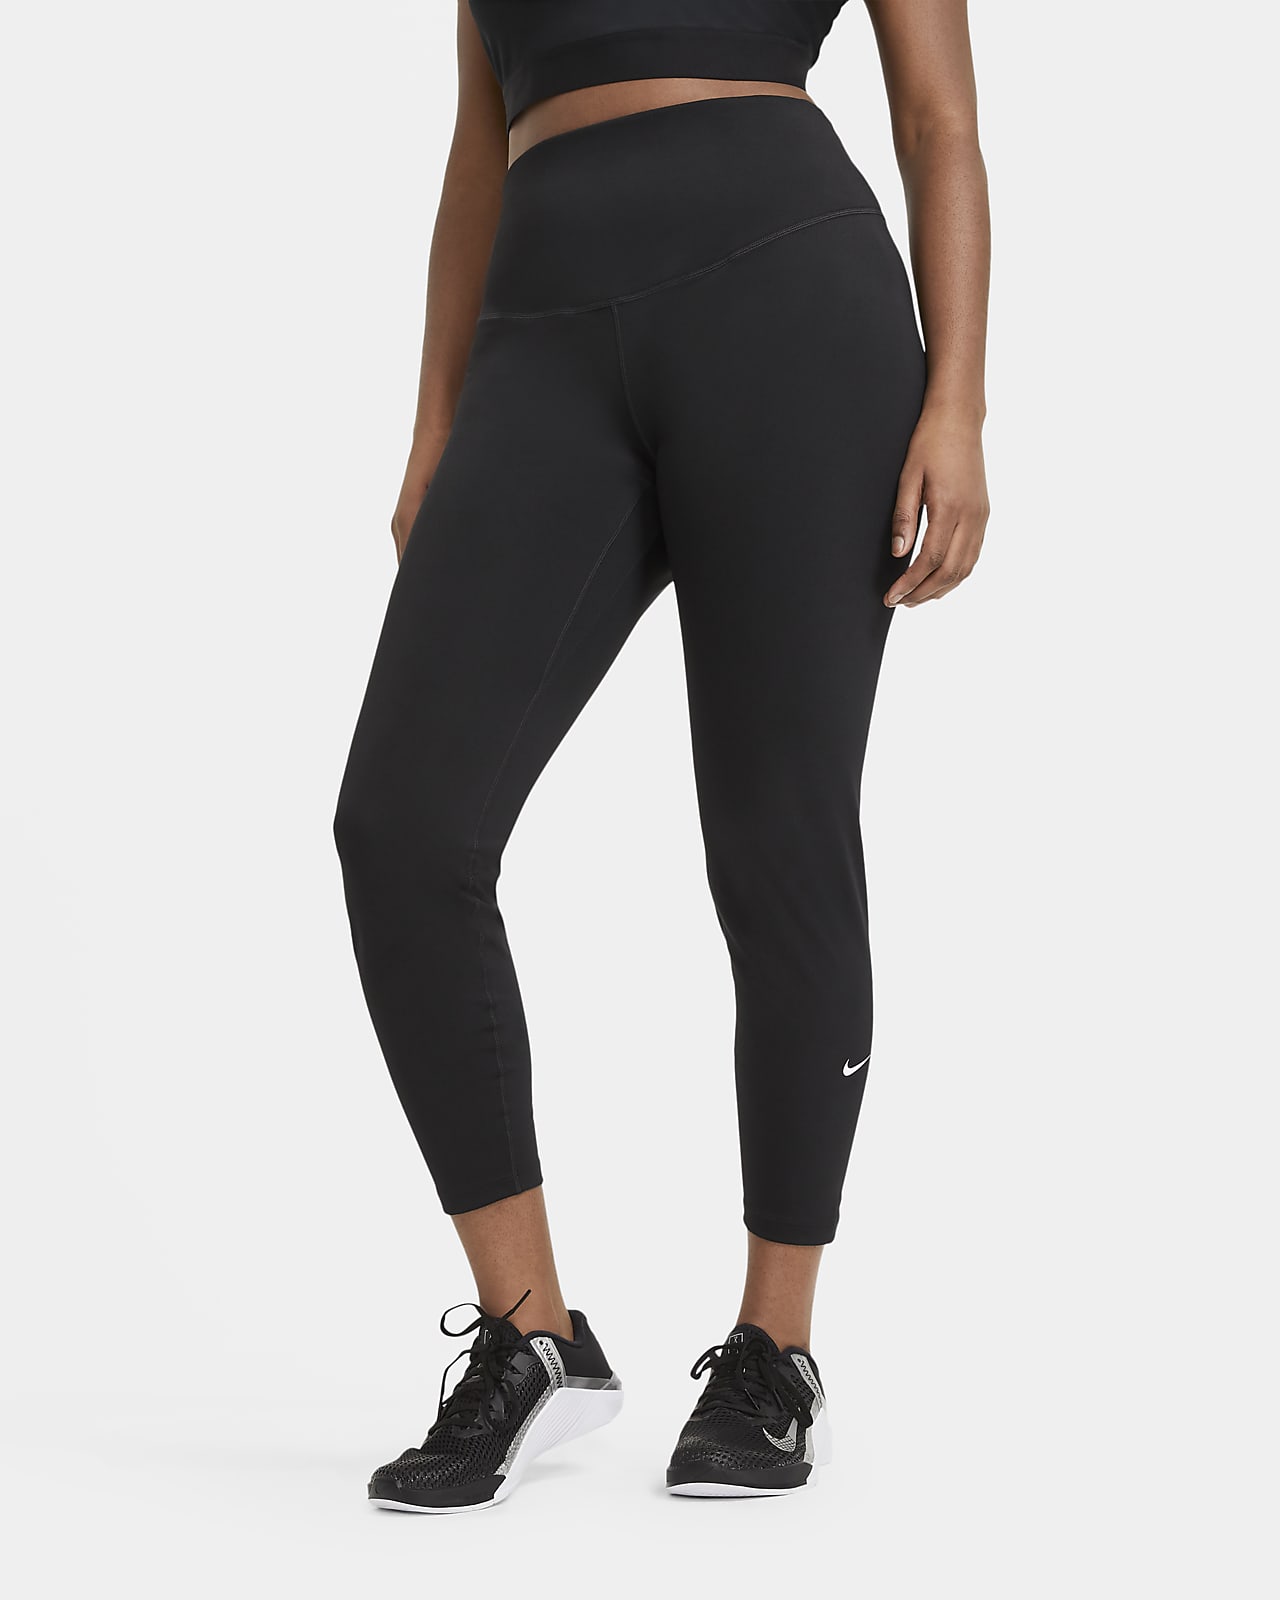 Legging taille haute femme Nike One Dri-FIT - Nike - Femme - Entretien  physique